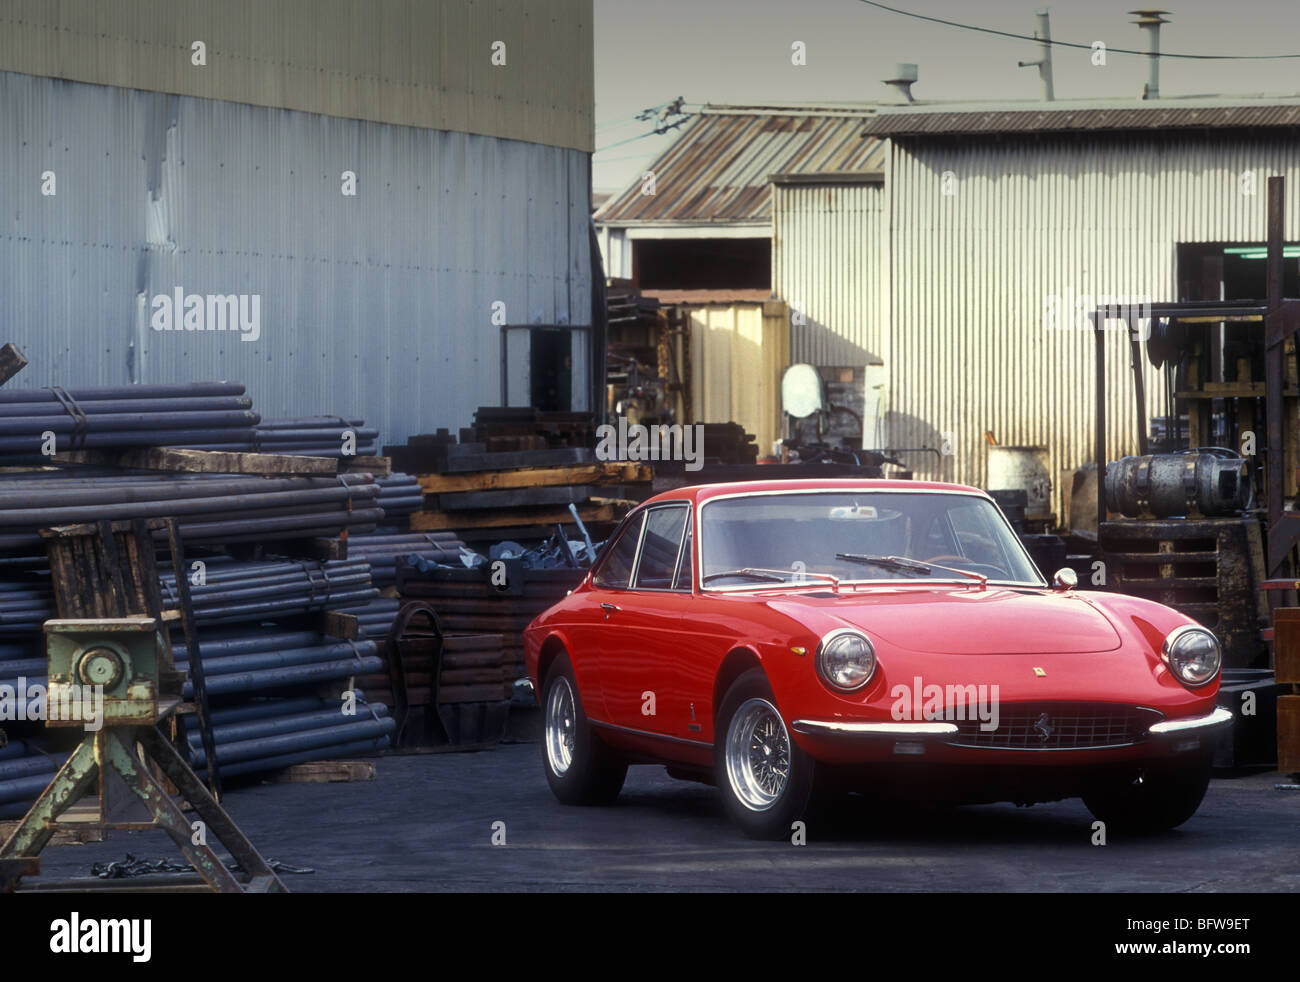 1969 Ferrari 375 GTC Stock Photo